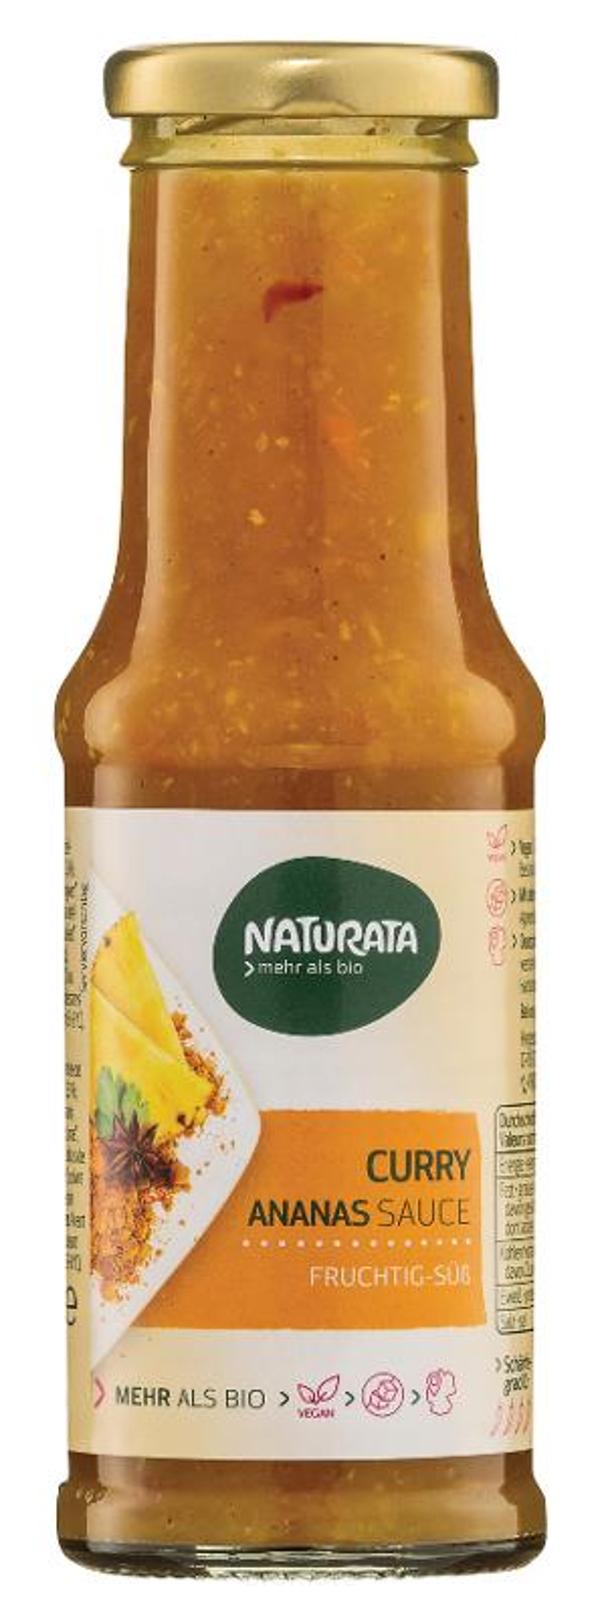 Produktfoto zu Curry Ananas Sauce